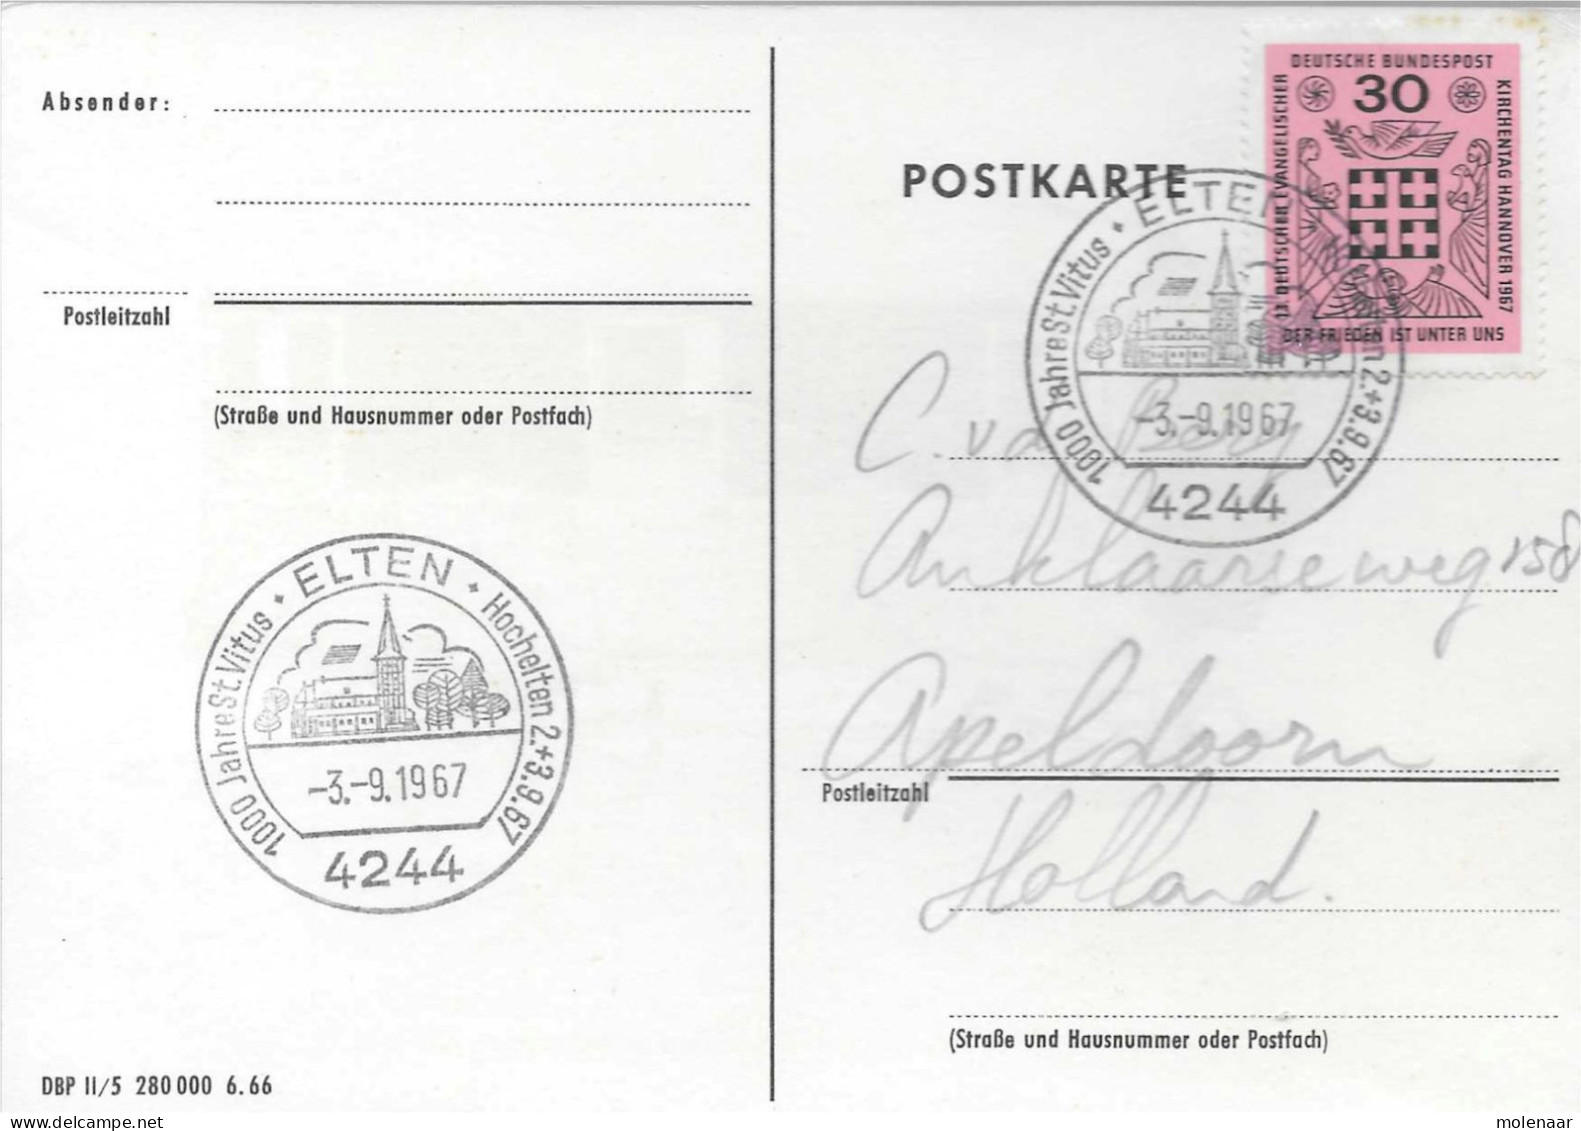 Postzegels > Europa > Duitsland > West-Duitsland > 1960-1969 > Kaart Met No. 536 (17310) - Briefe U. Dokumente